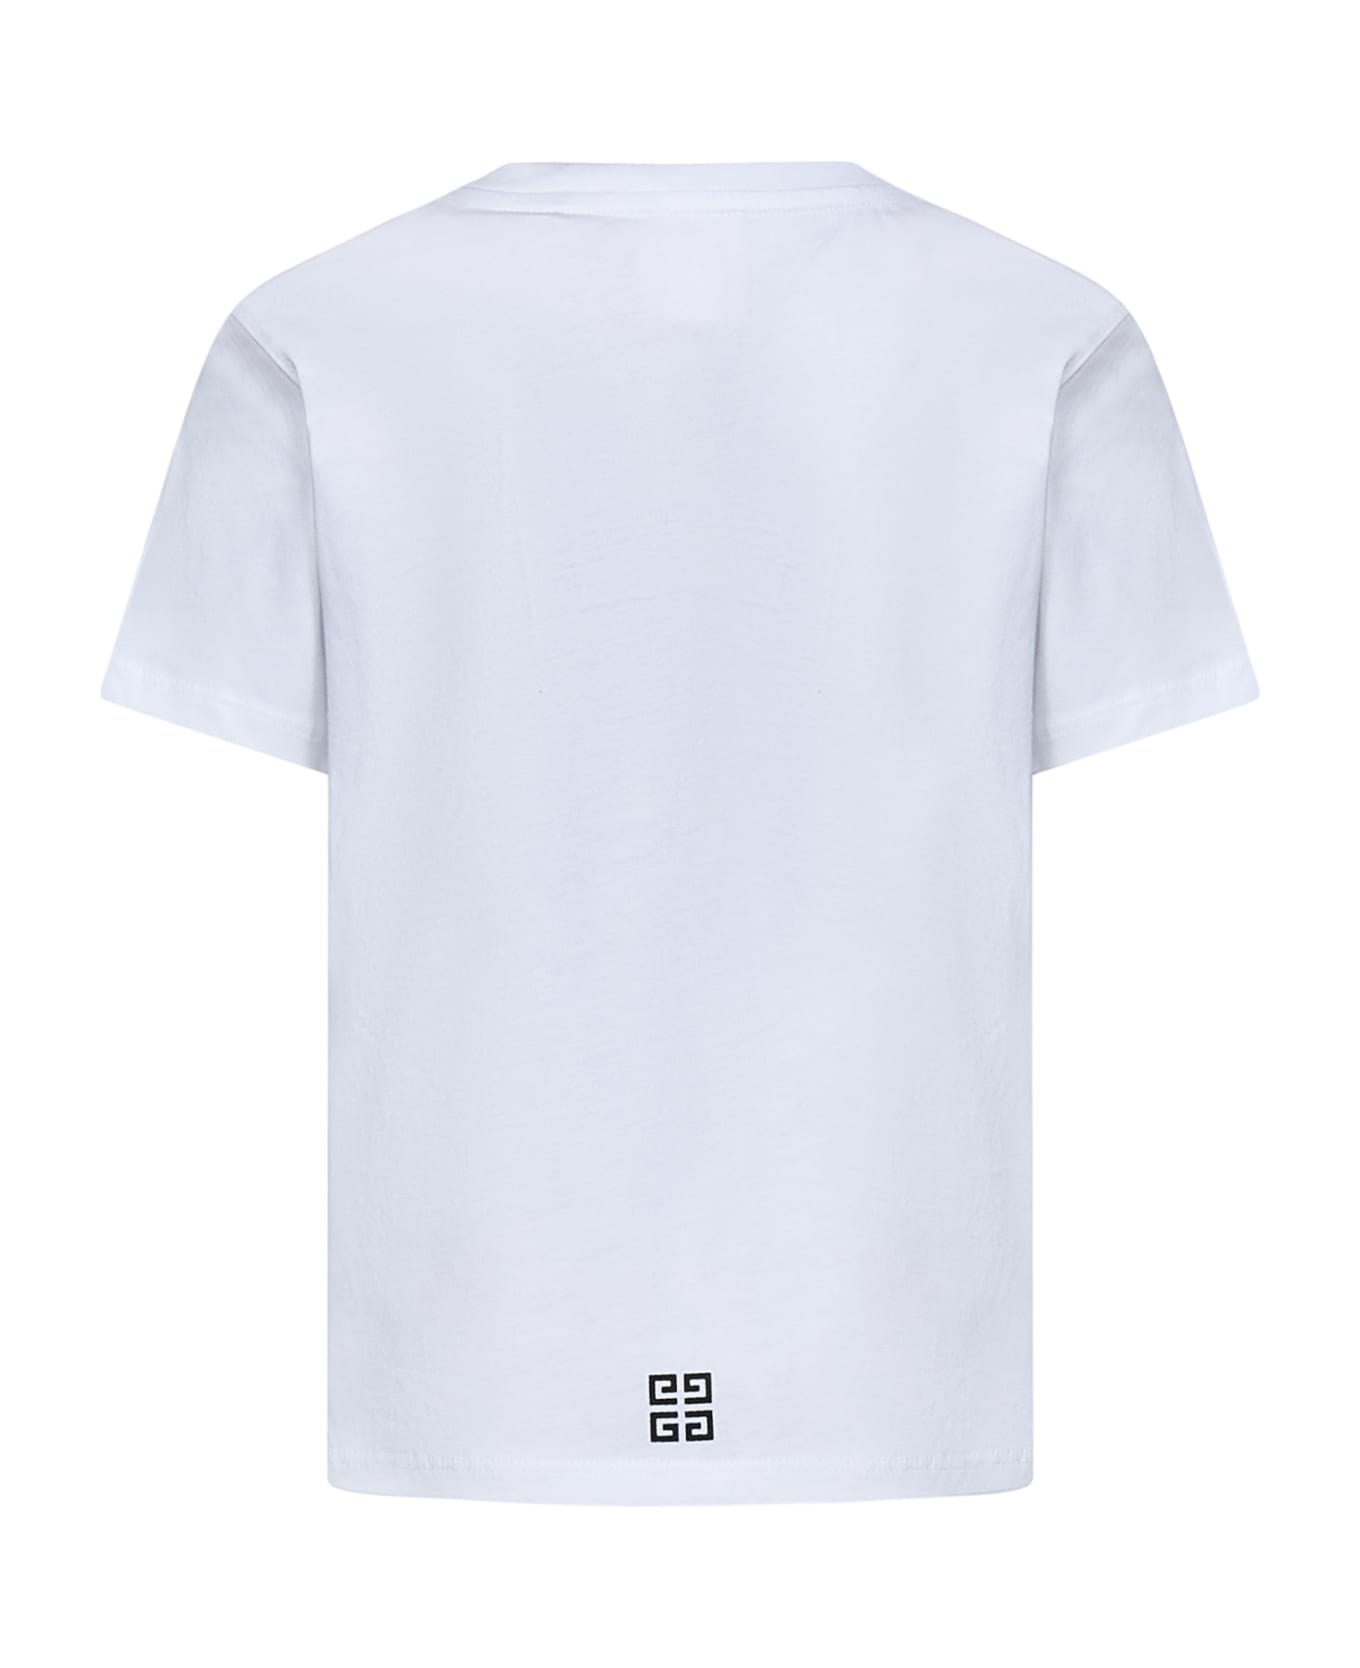 Givenchy Kids T-shirt - White